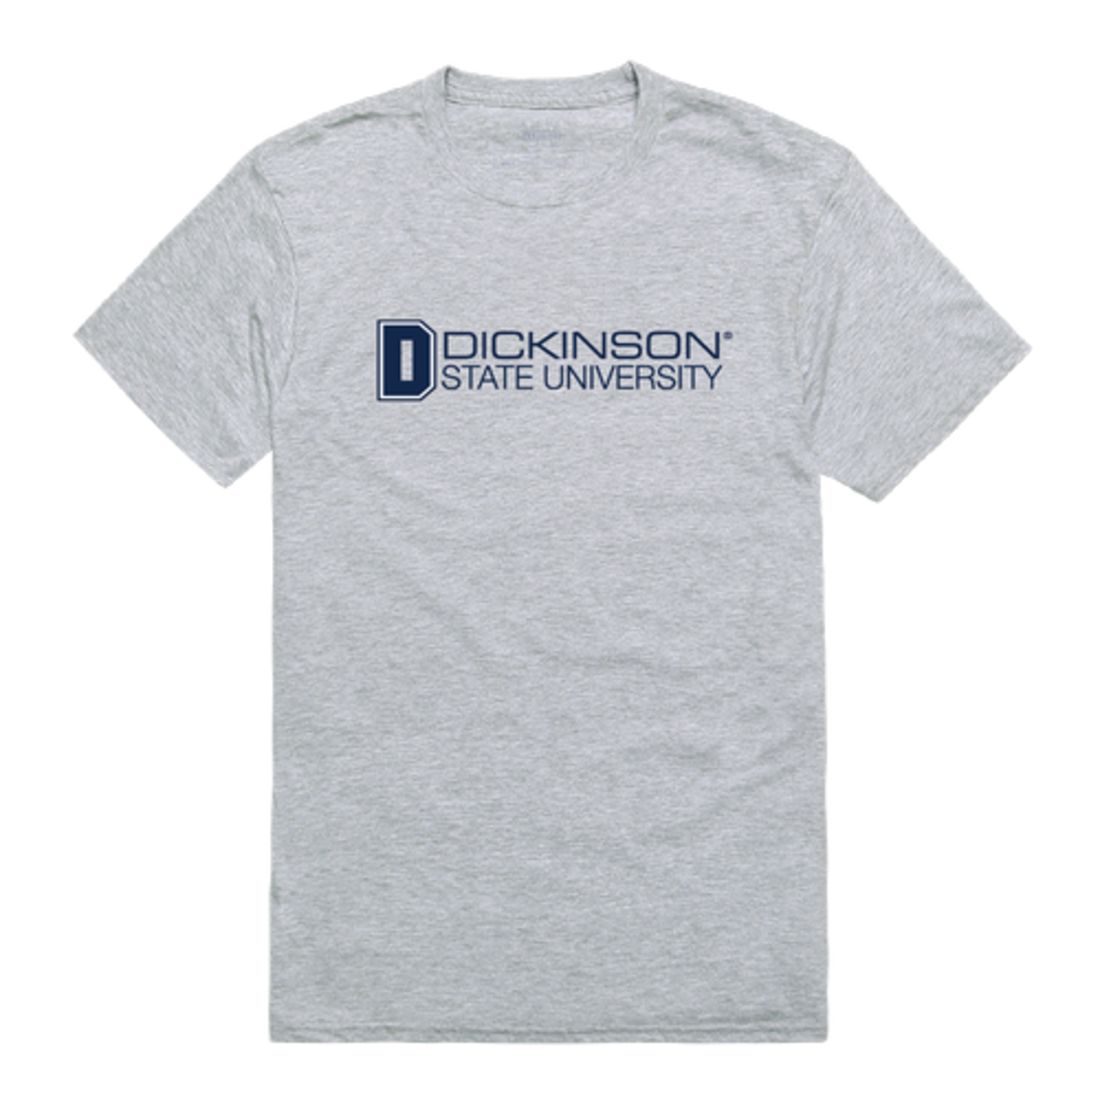 Dickinson State University Blue Hawks Institutional T-Shirt Tee